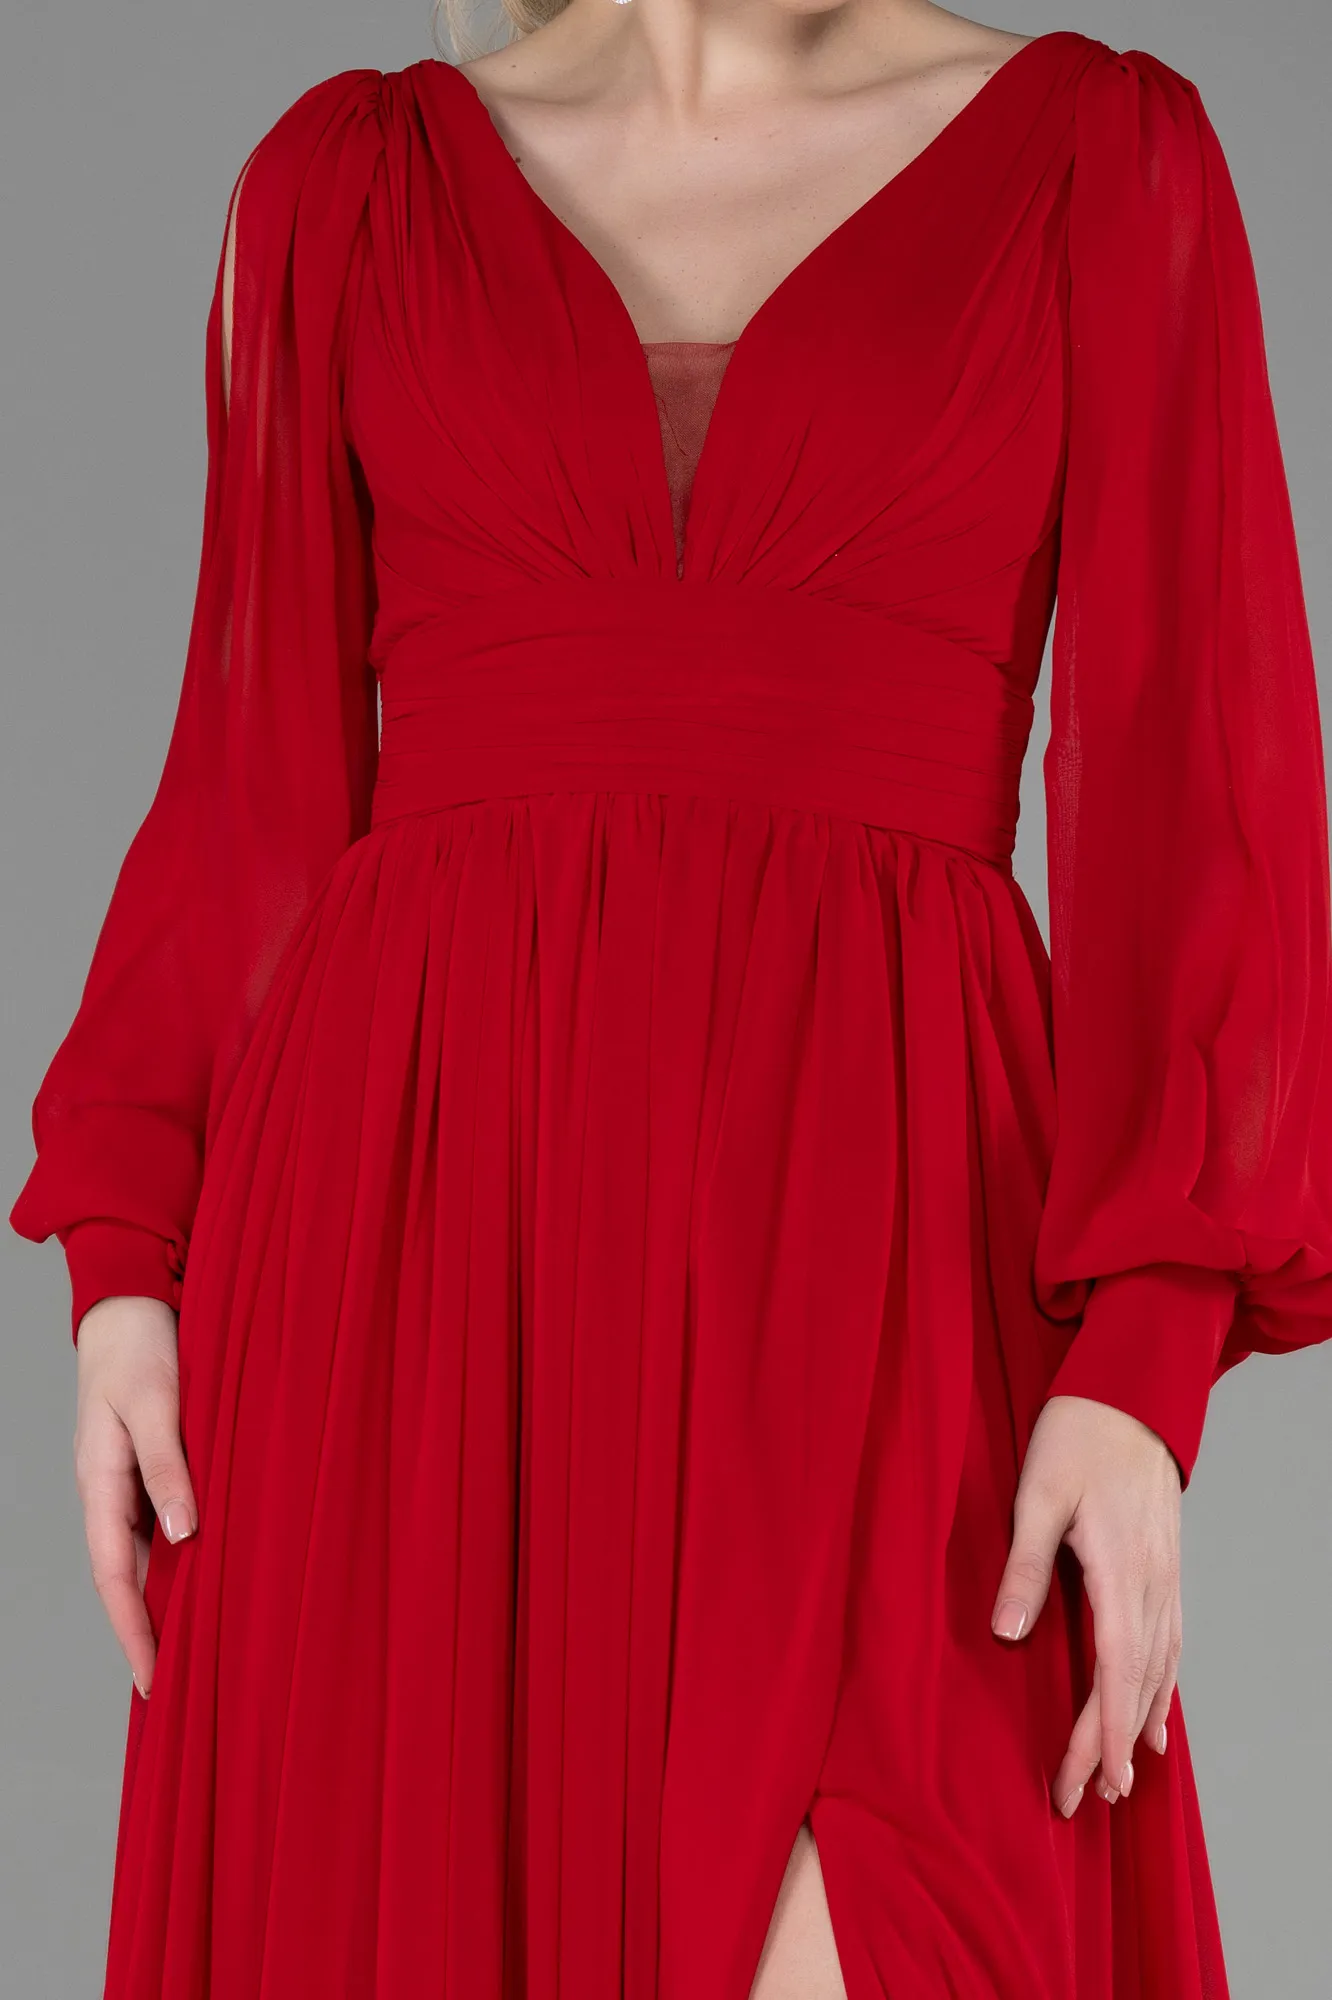 Red-Long Chiffon Evening Dress ABU1702